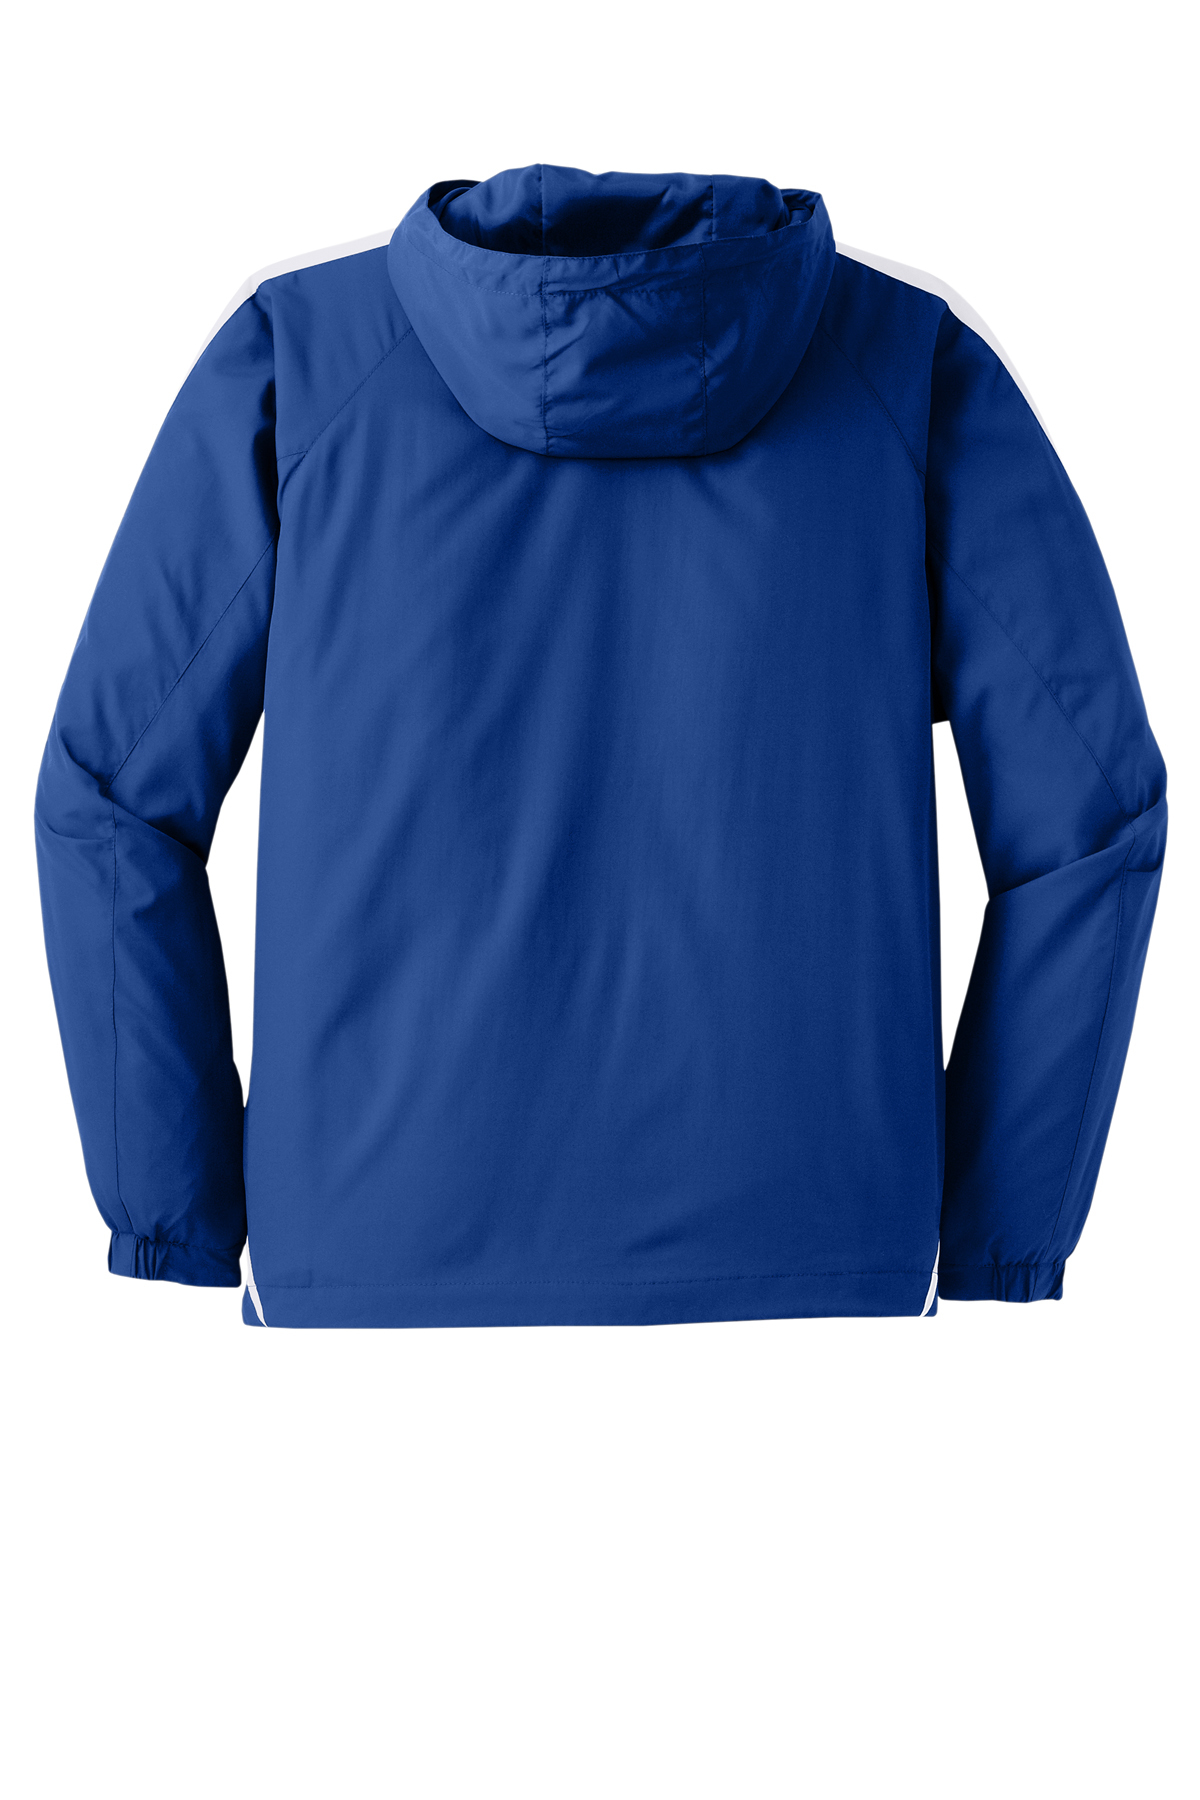 Tek Gear Color Block Solid Sapphire Blue Track Jacket Size M - 47% off